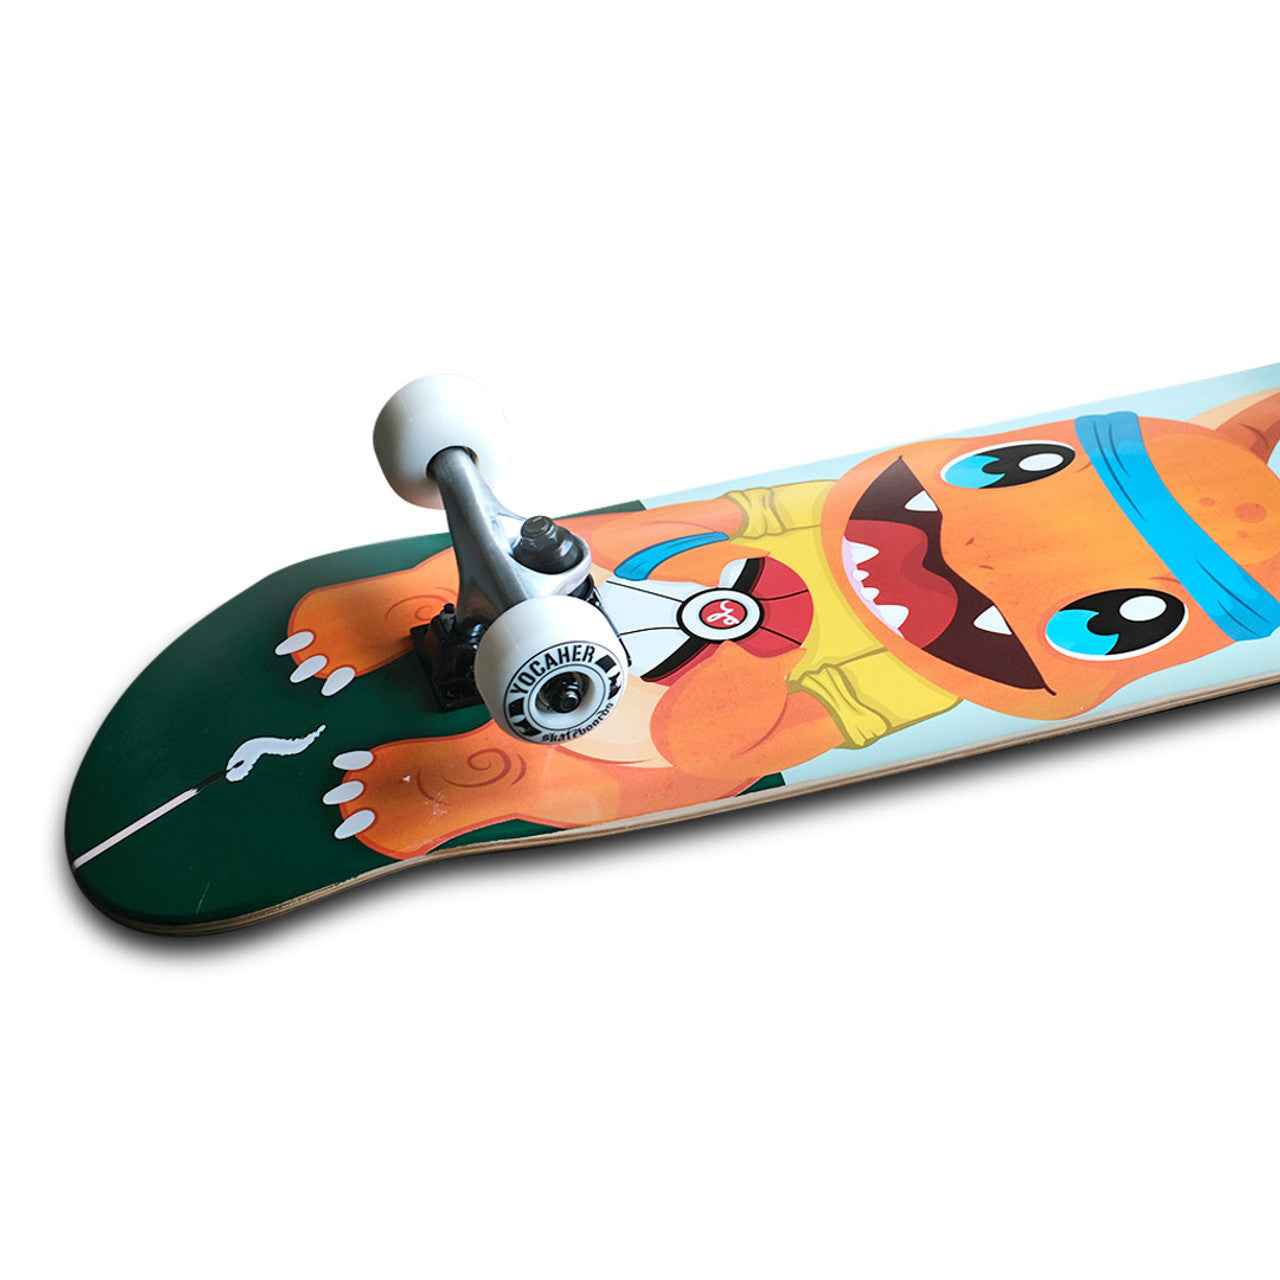 Yocaher Complete Skateboard 7.75"  - PIKA Series - Charm